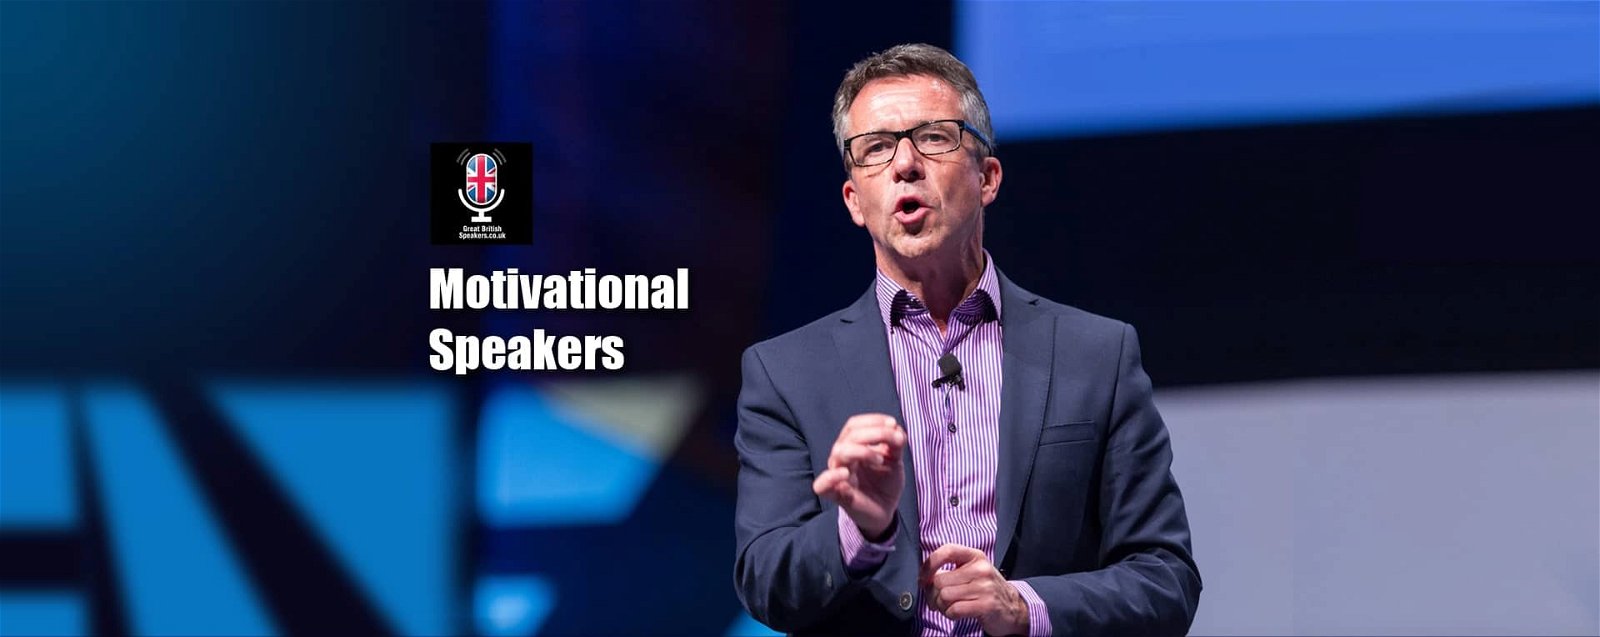 Motivational Speakers Slider Great British Speakers-min